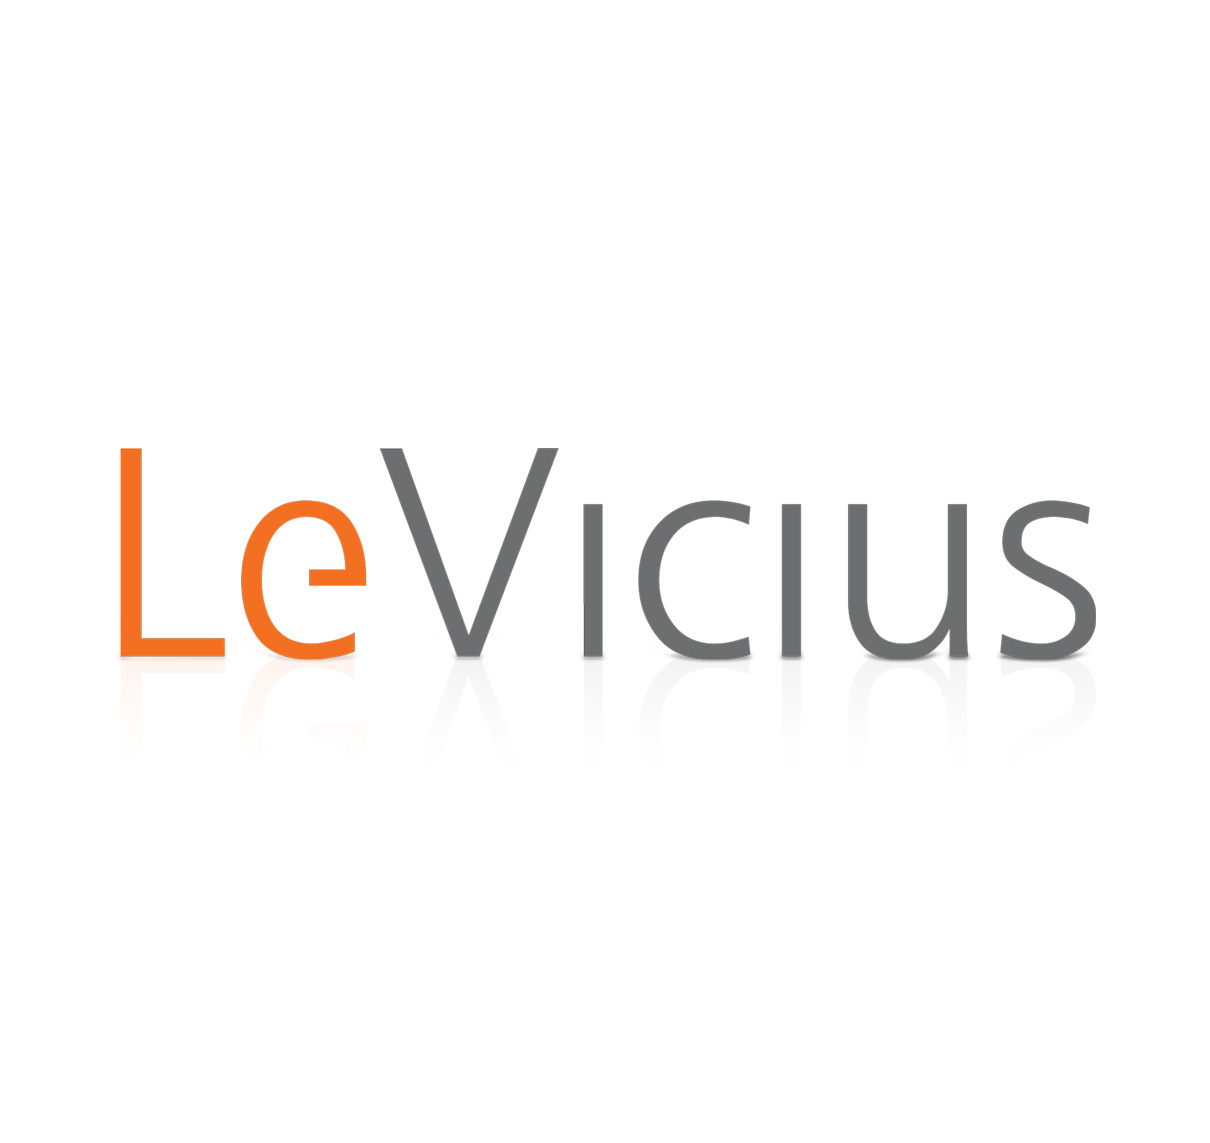 Servis Vector Logo - Download Free SVG Icon | Worldvectorlogo